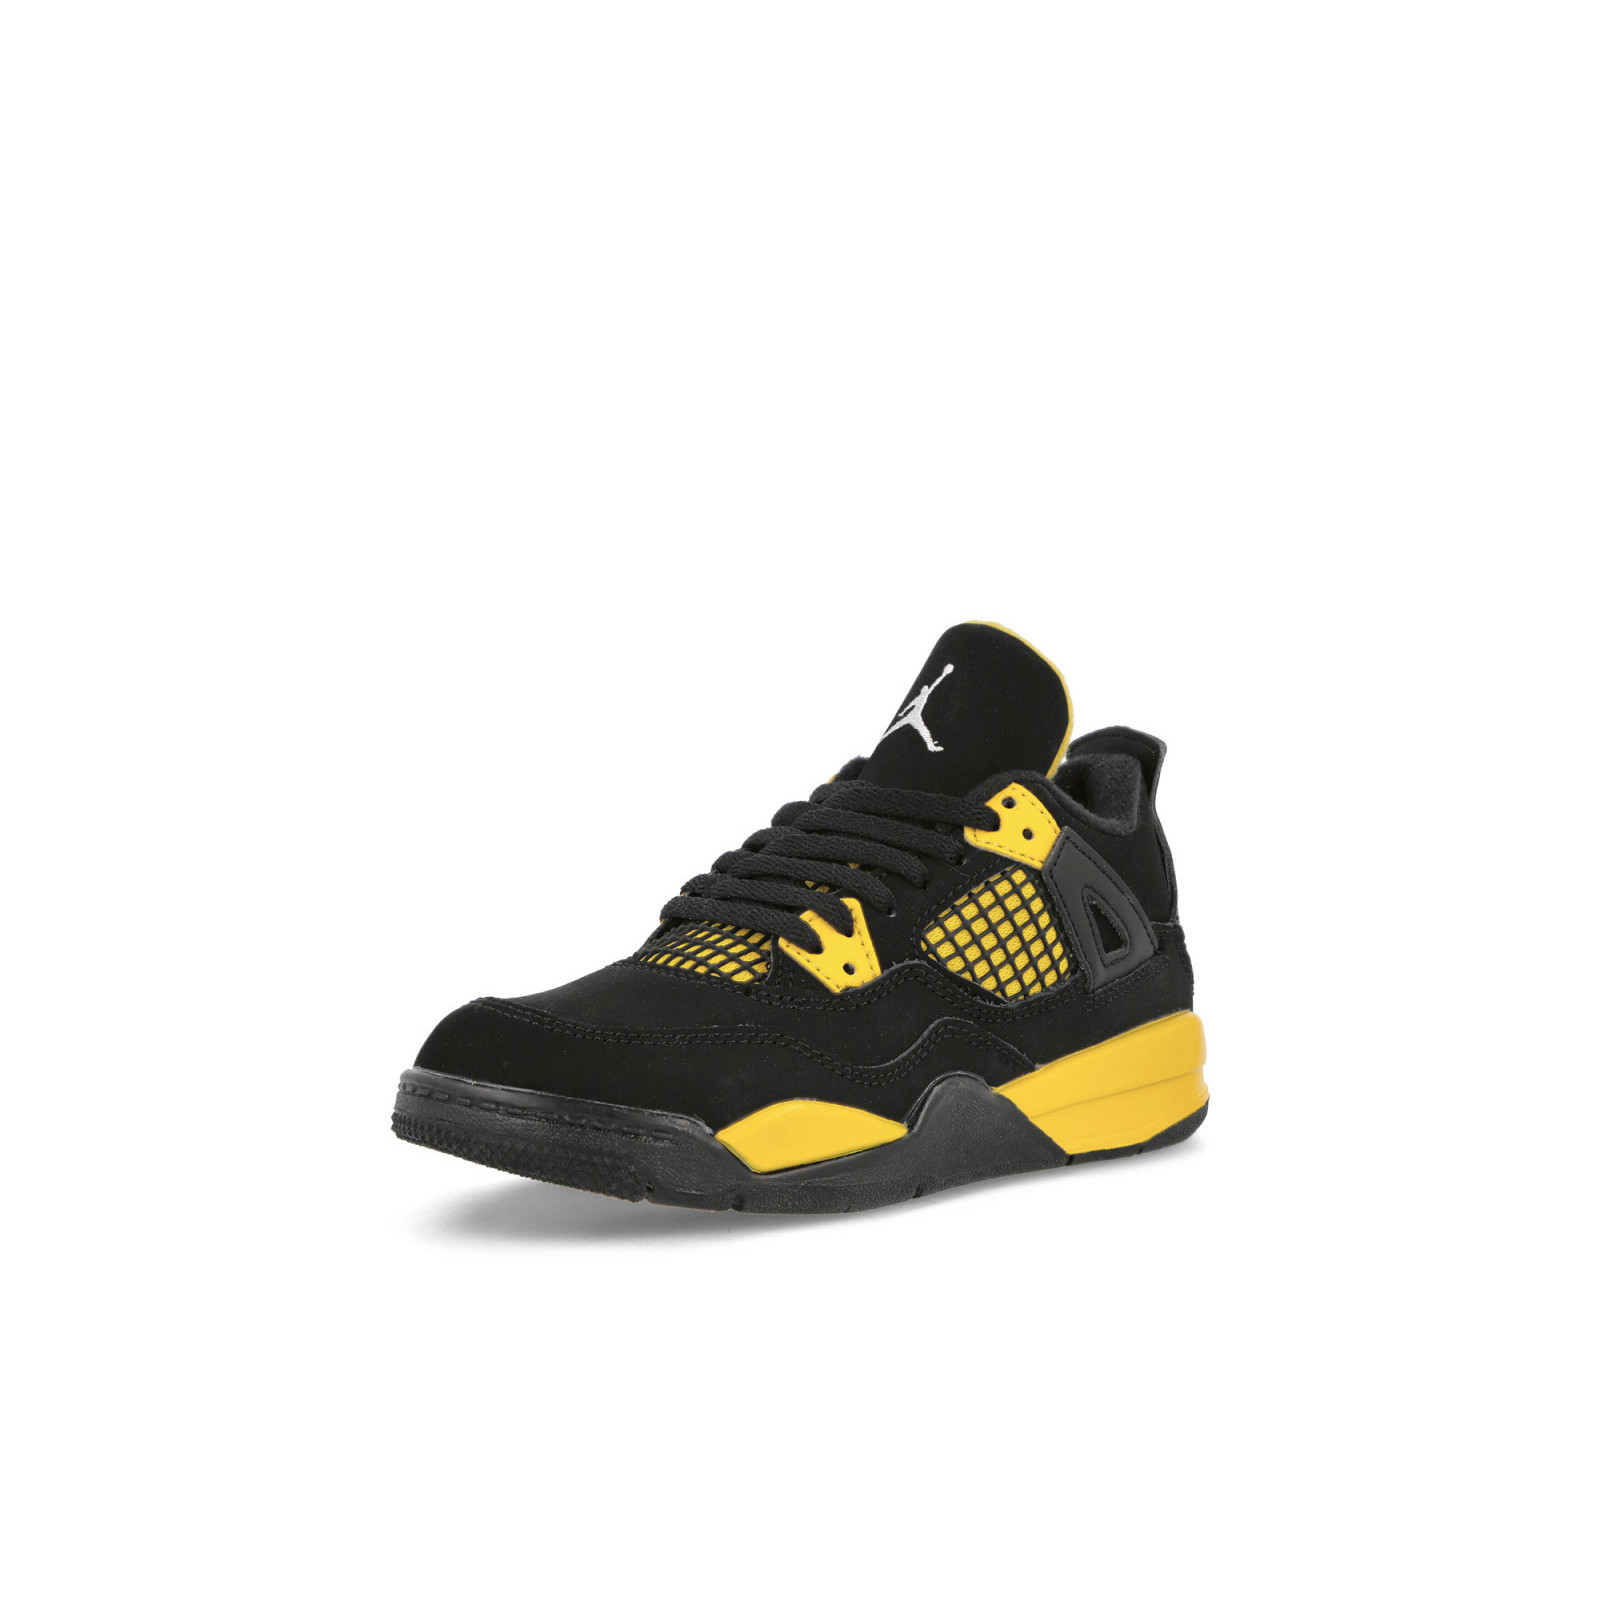 Air Jordan 4 Retro (PS)
« Tour Yellow »